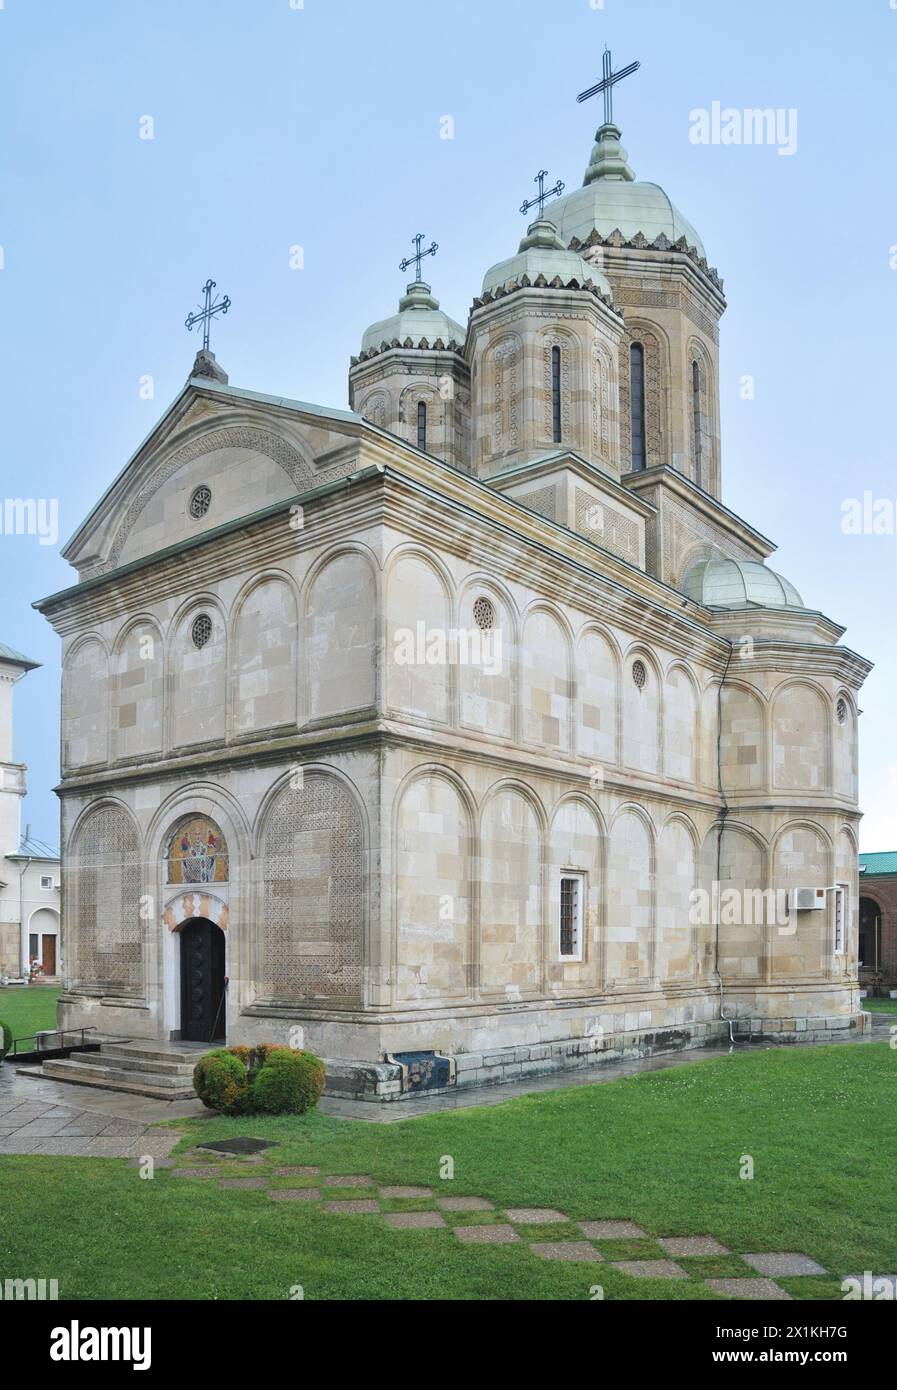 Dealu Monastery, Church of Saint Nicholas, Viforata, Romania Stock Photo